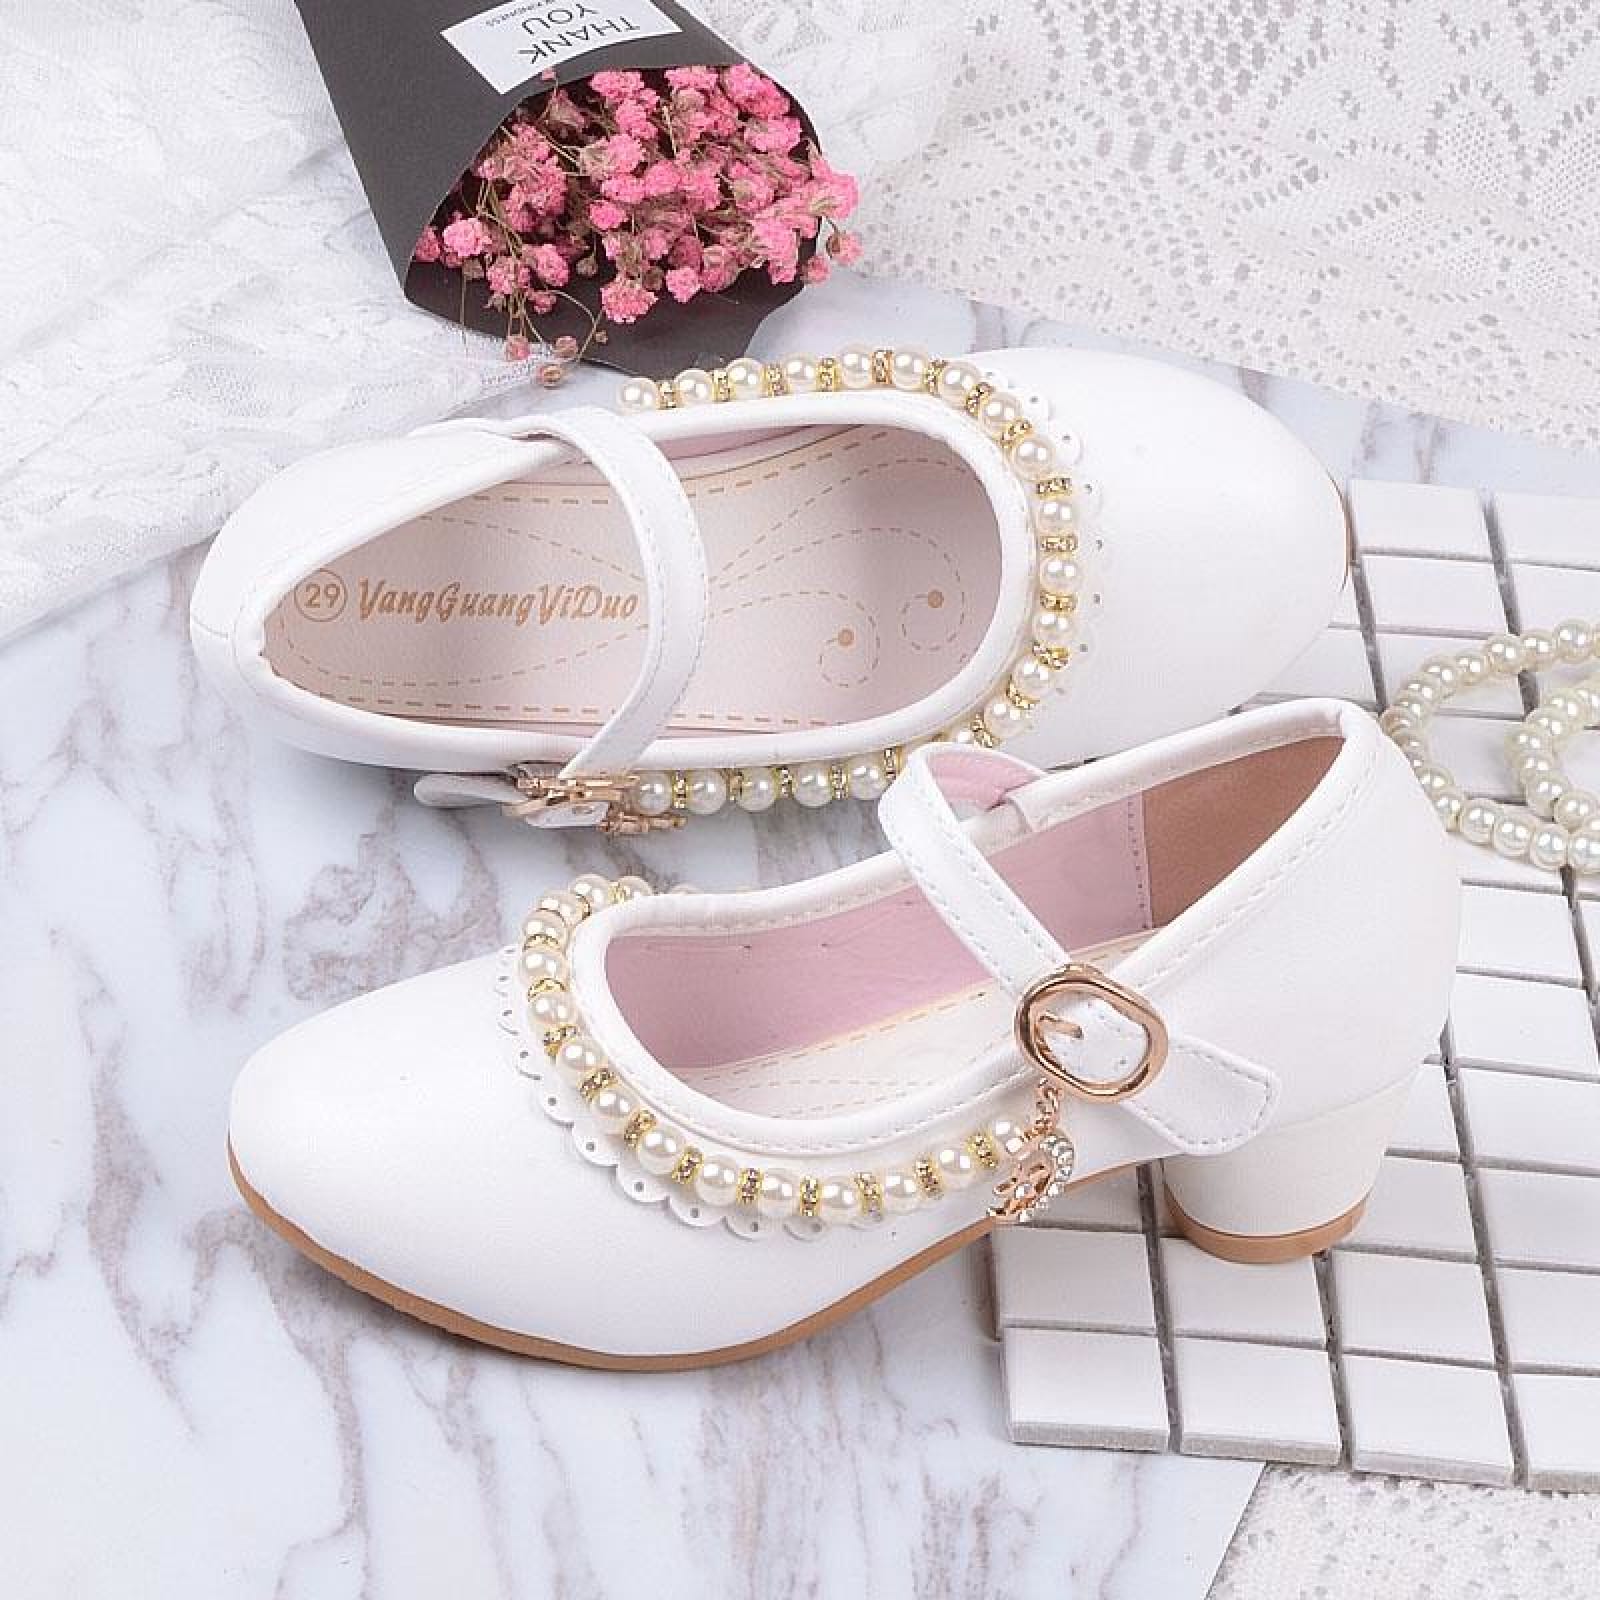 Ivory / Pink Leather Rhinestone Pearls Wedding Flower Girl Shoes High Heels Princess Shoes